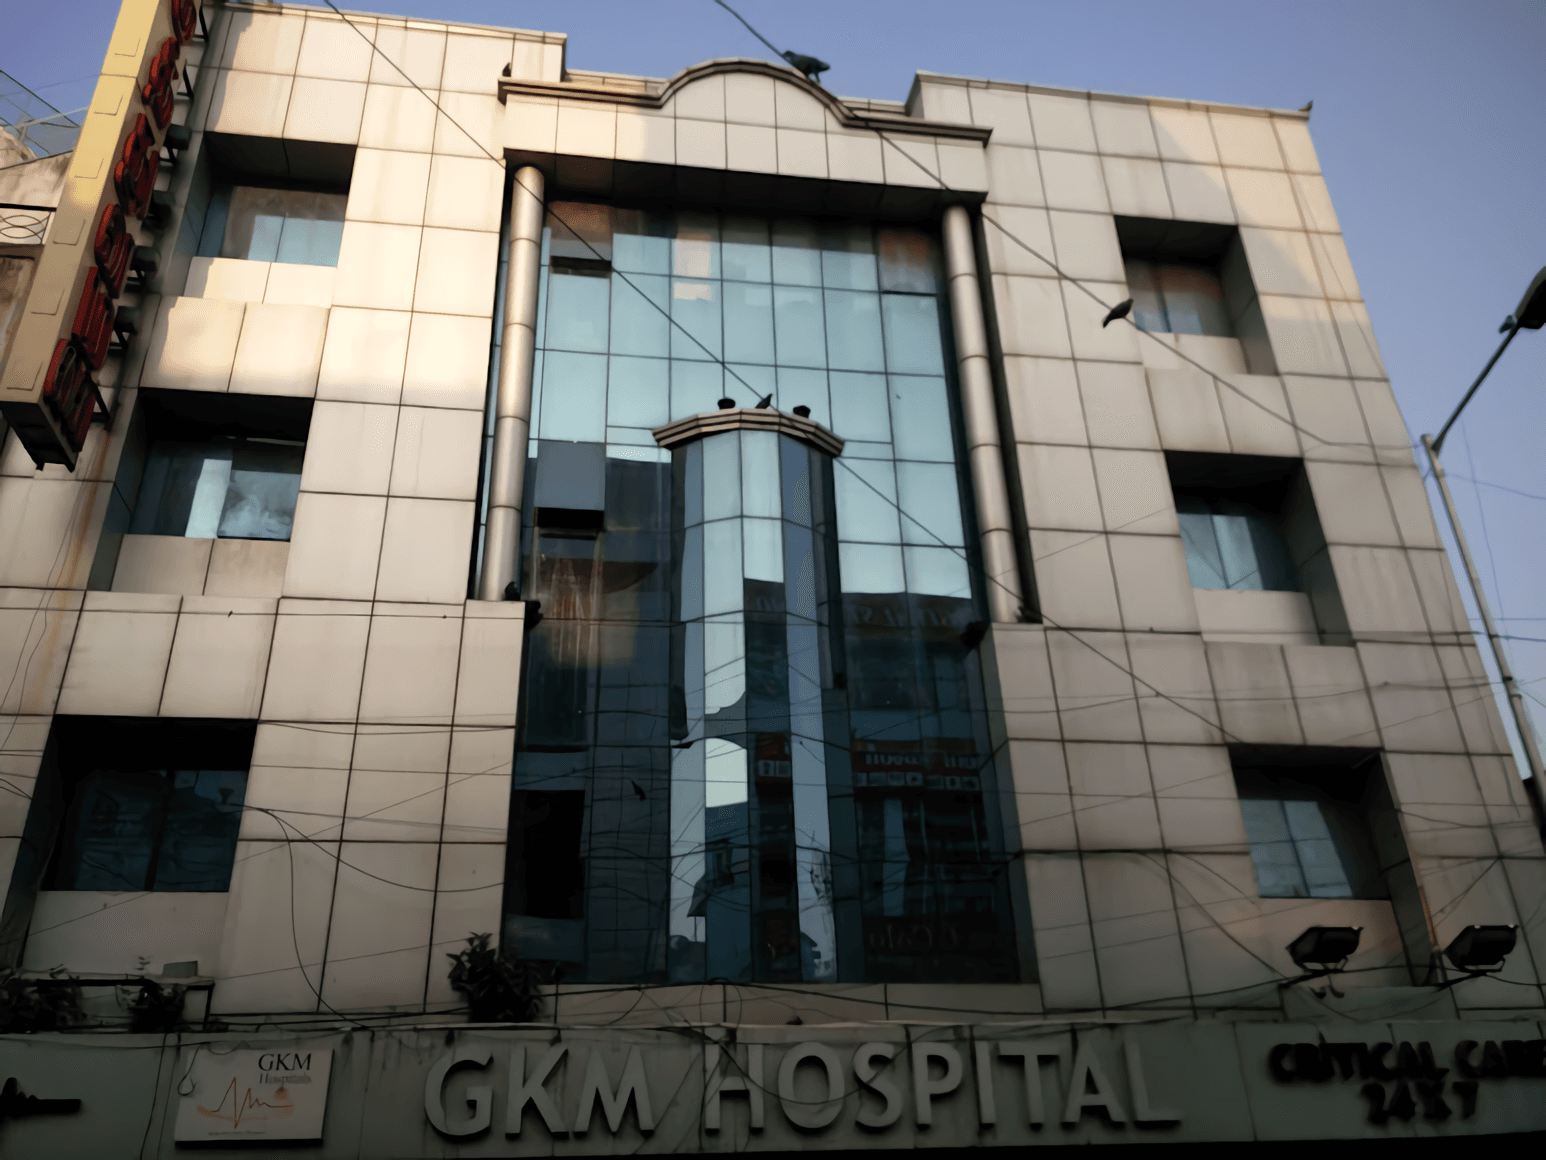 G K M Hospital